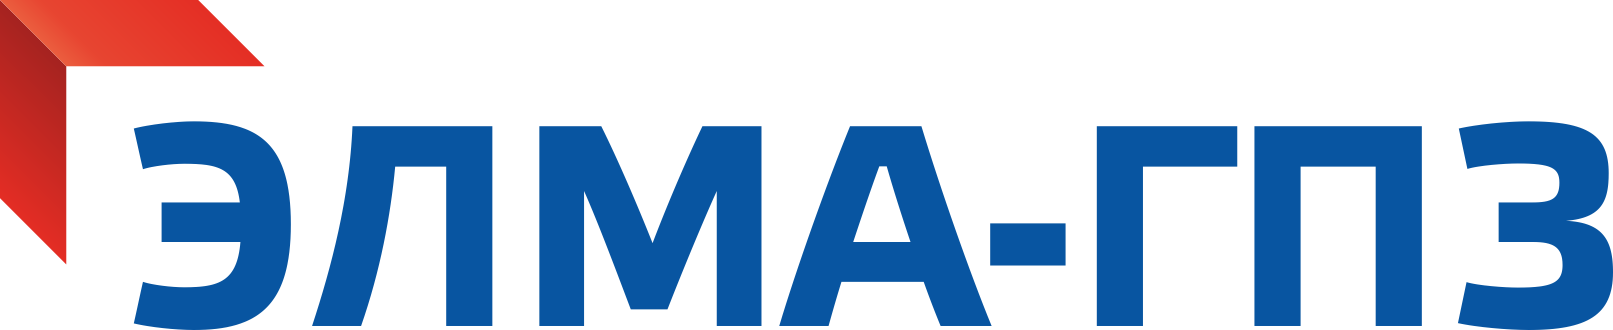 menu-logo